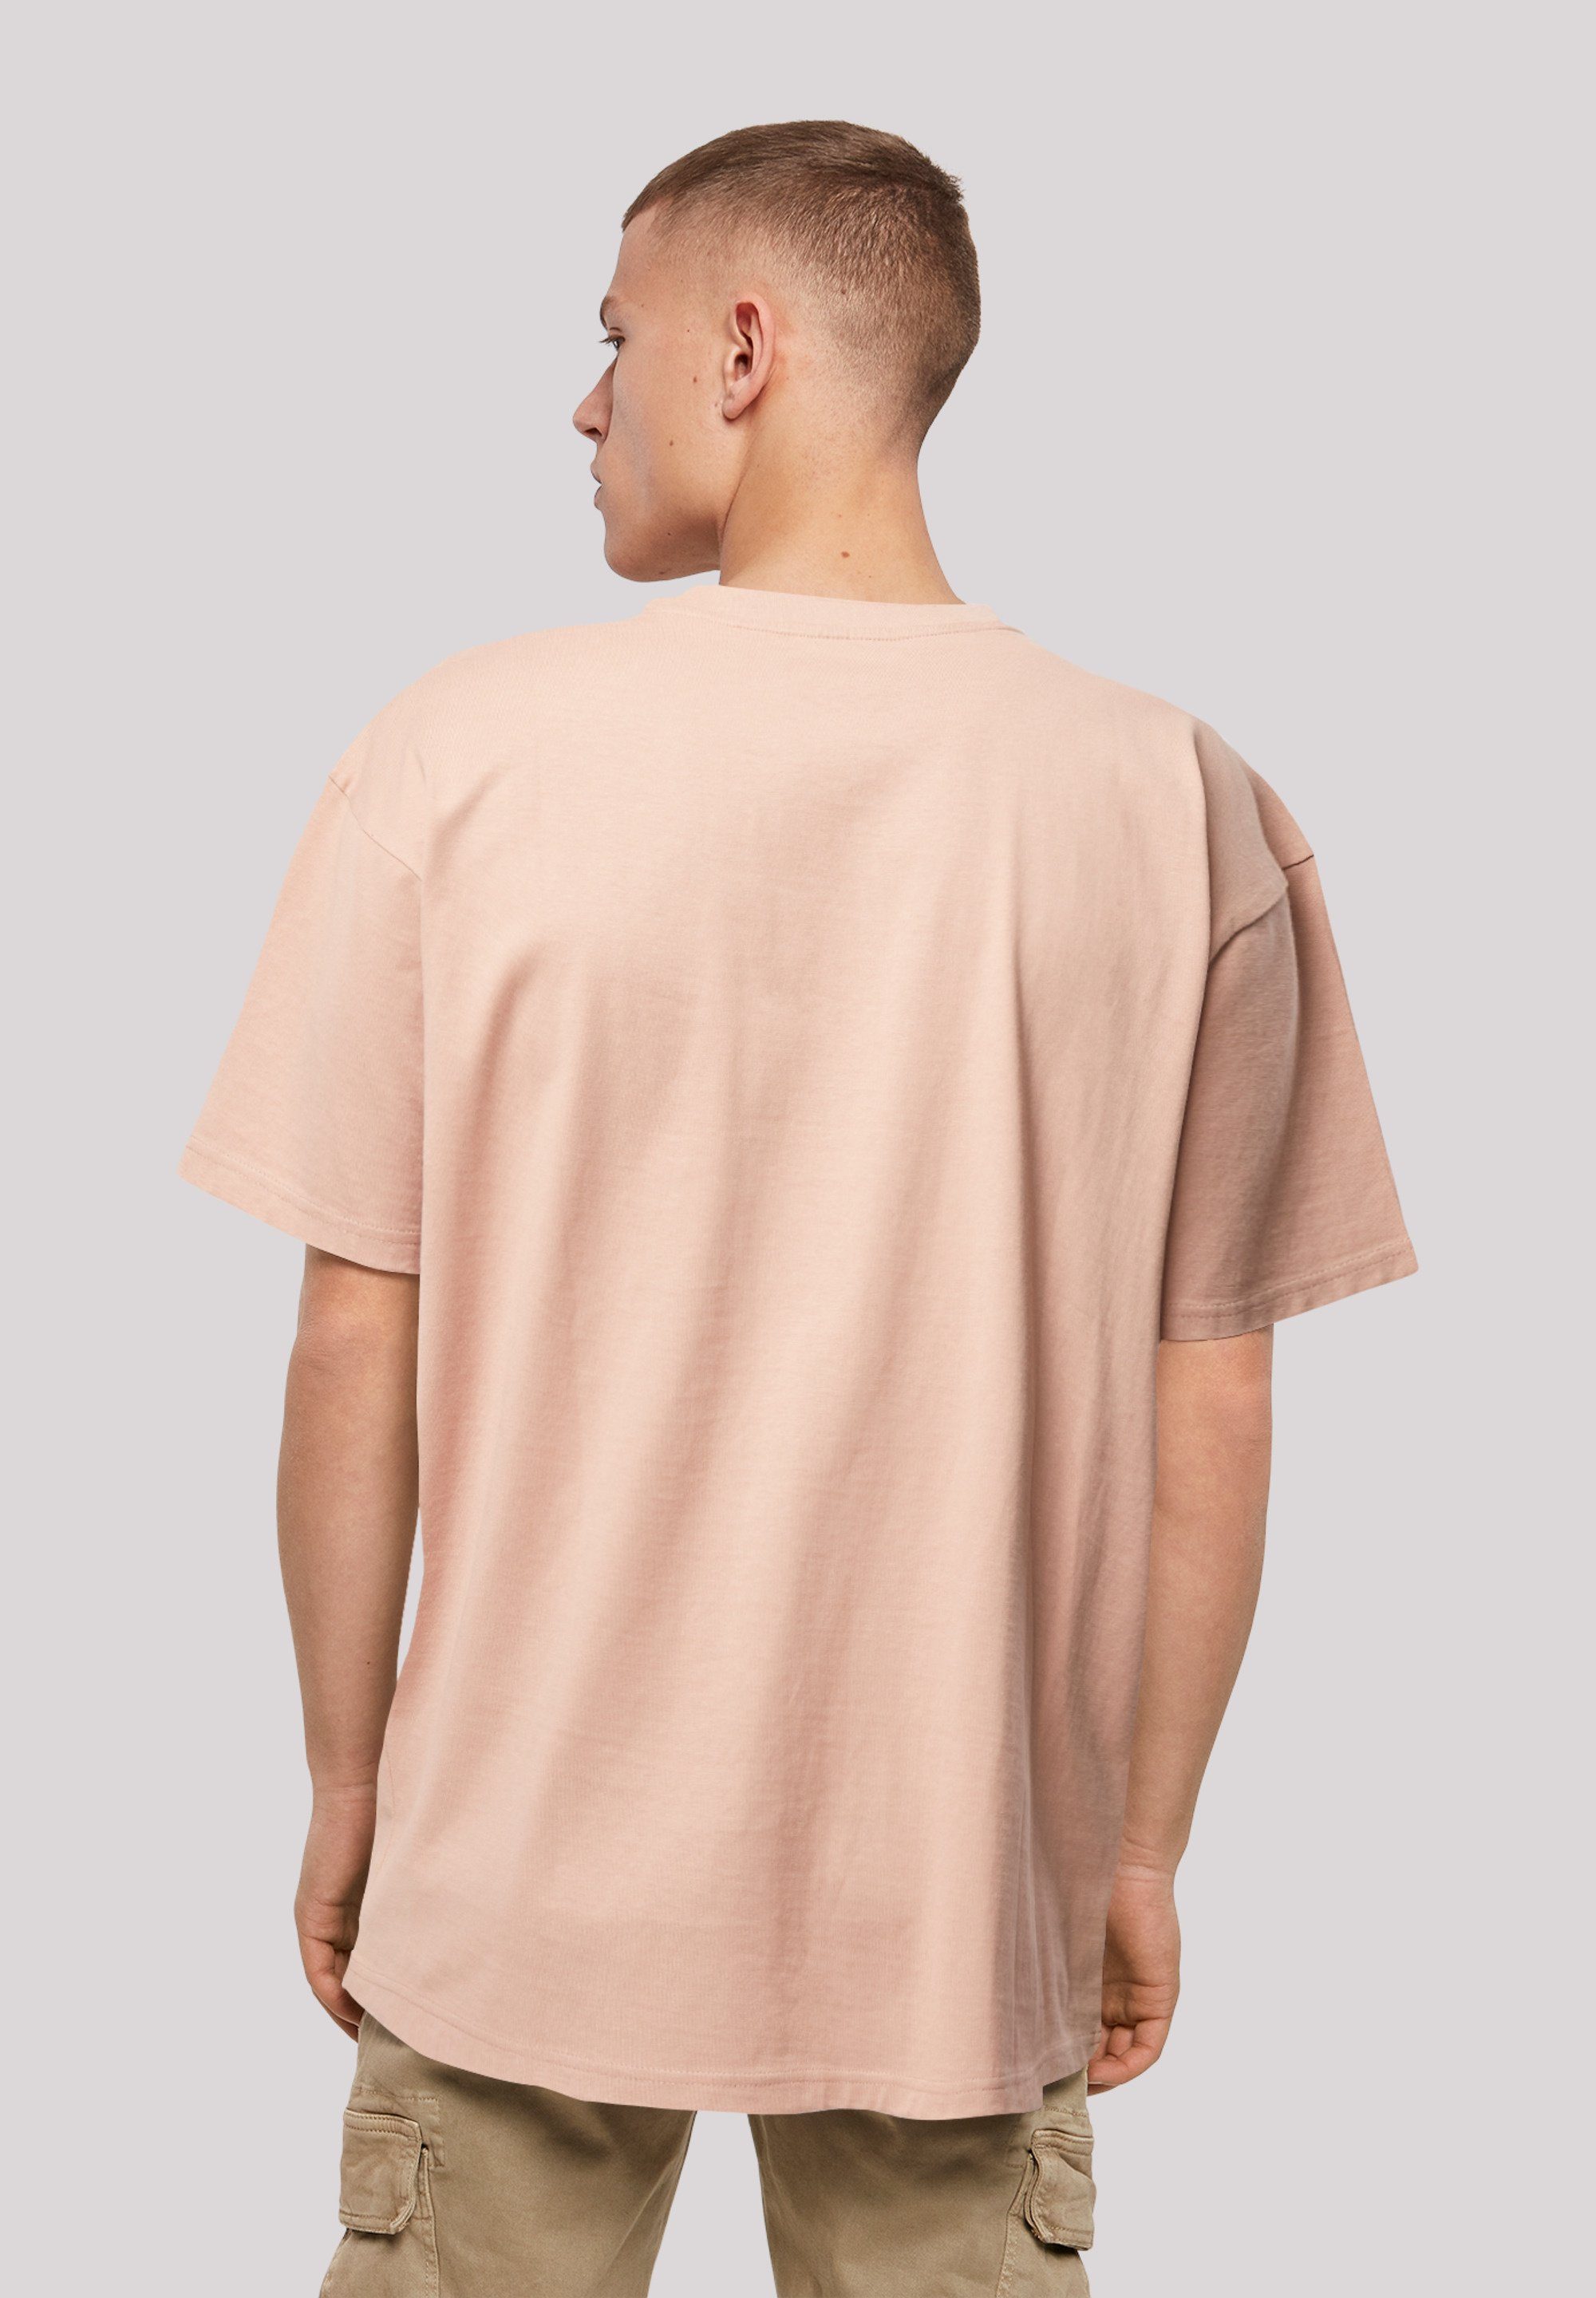 F4NT4STIC T-Shirt East Village Manhatten amber TEE OVERSIZE Print